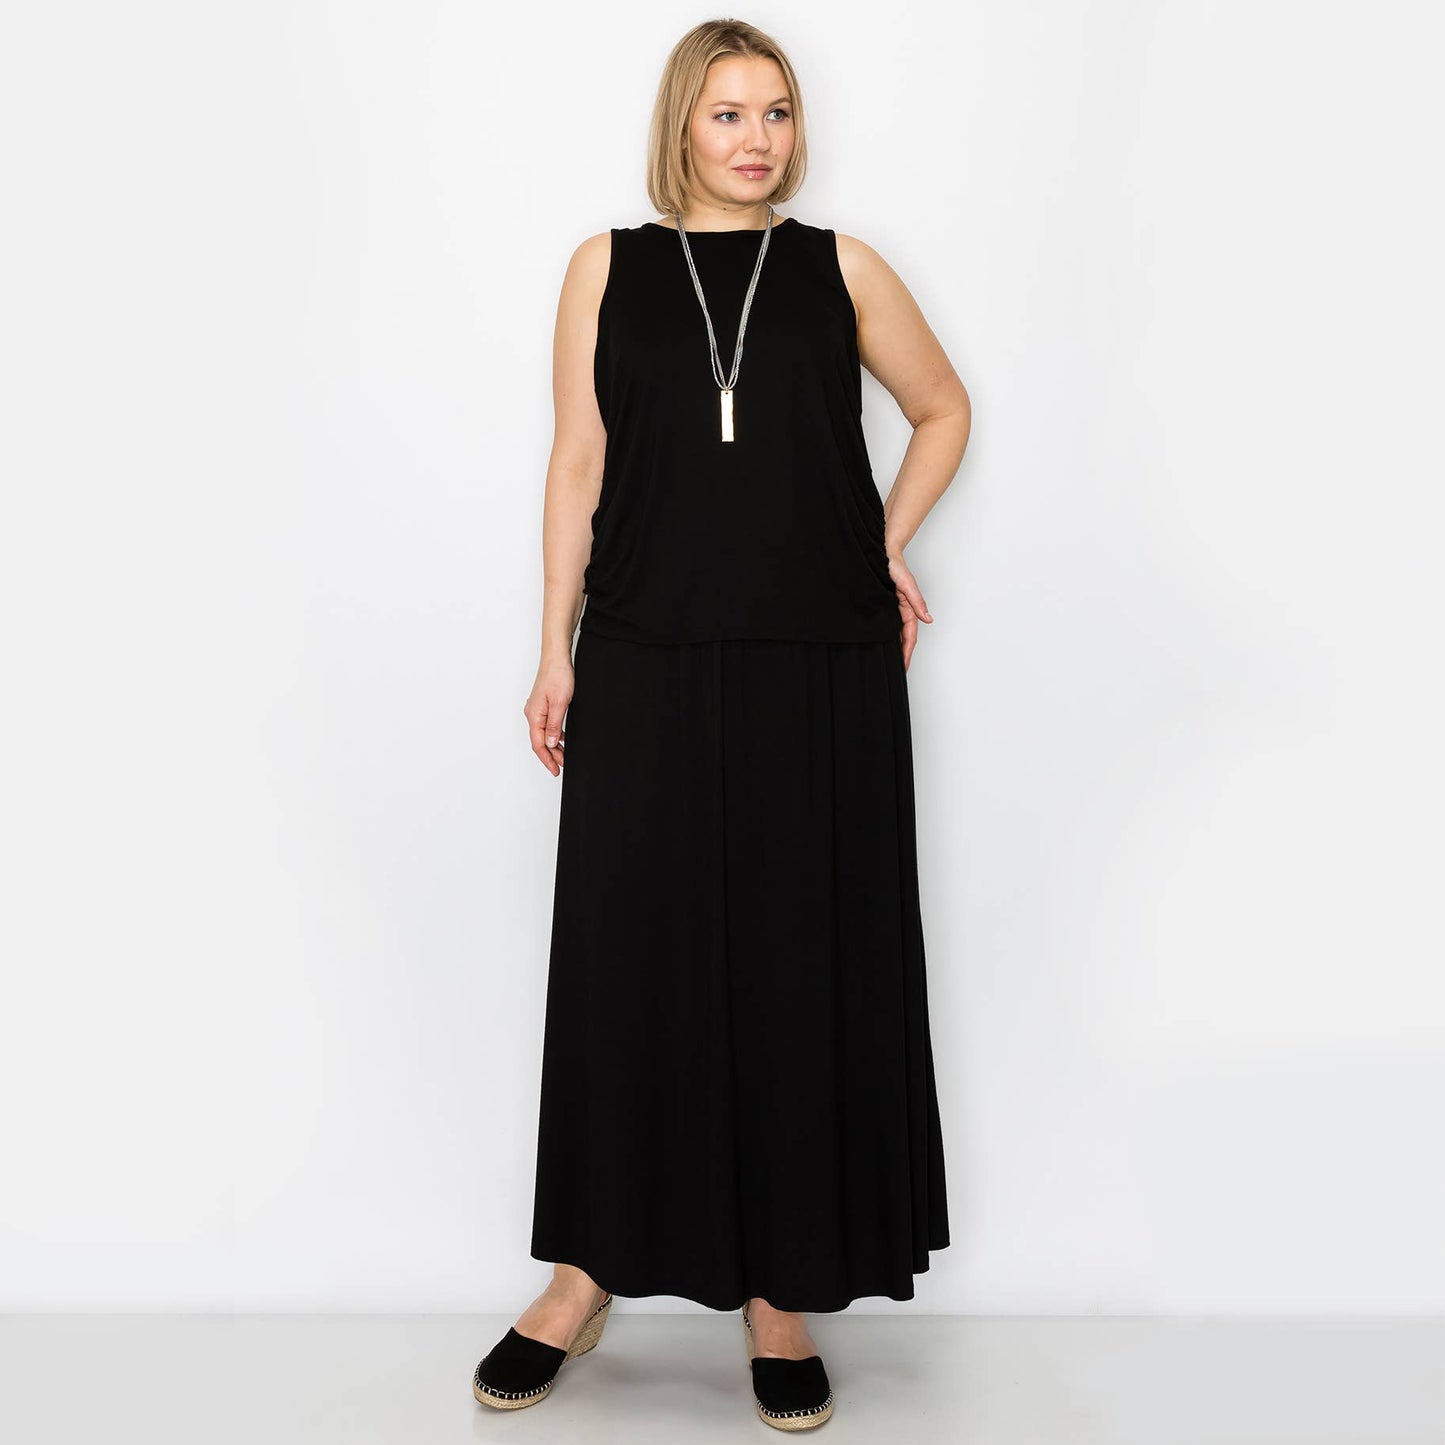 Elastic Waist Maxi Skirt Curve - Black